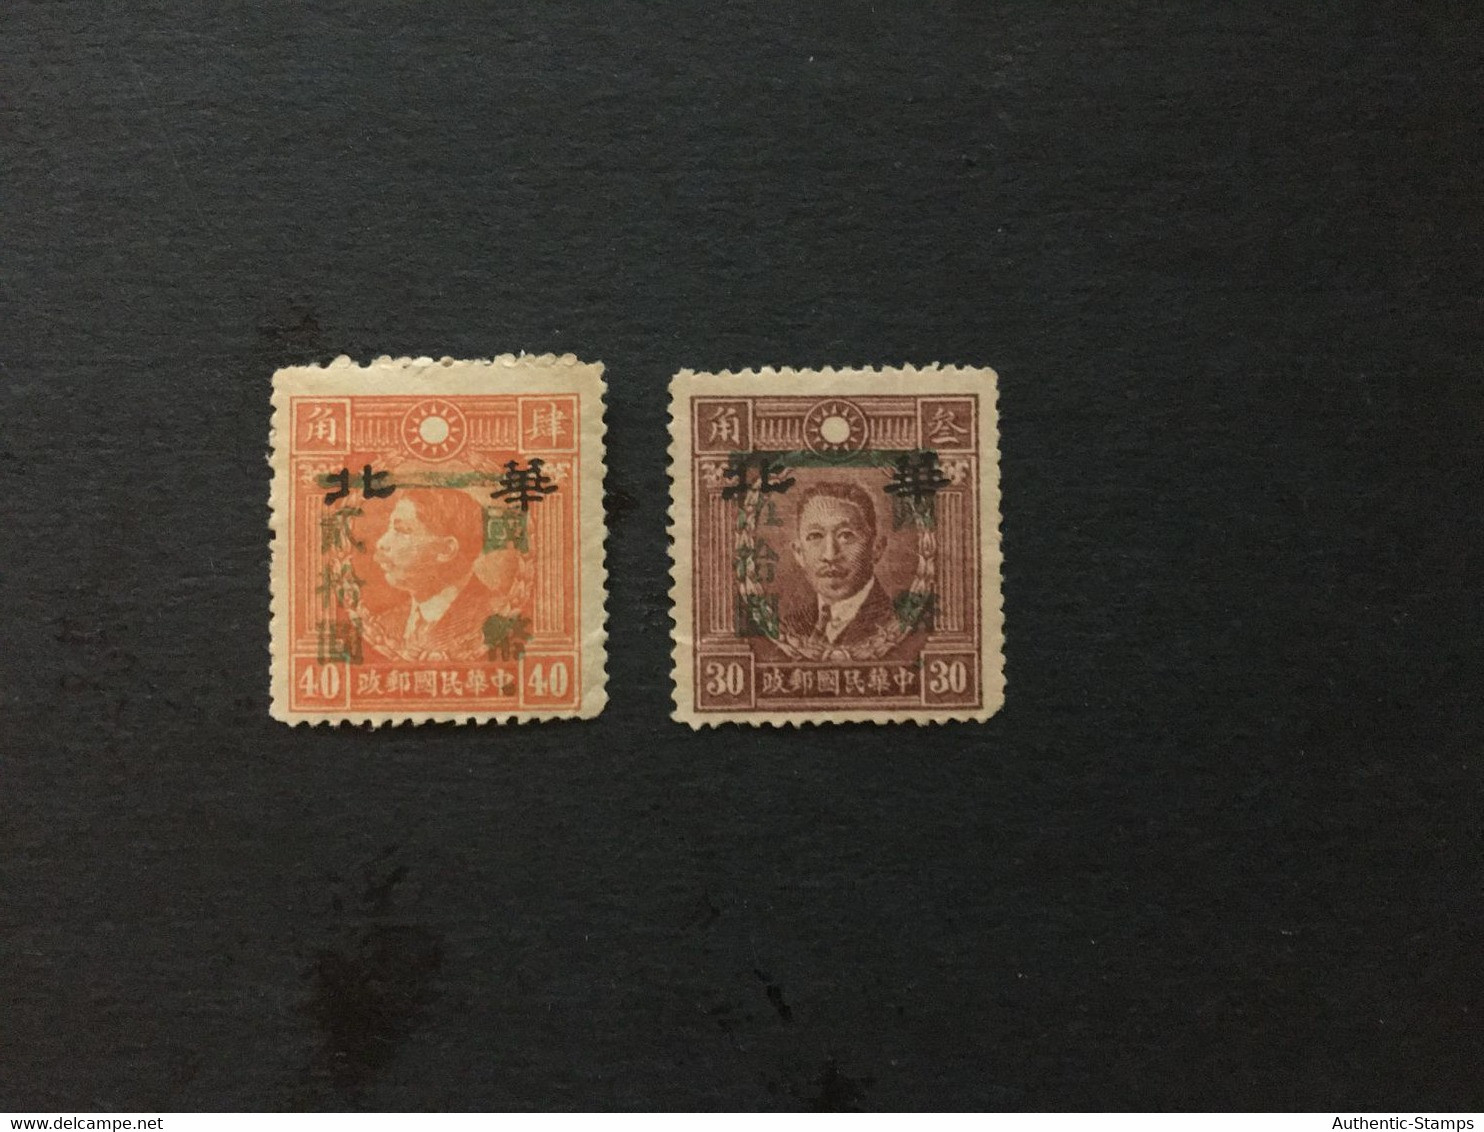 CHINA Local Stamp SET, Unused, RARE OVERPRINT, Japanese OCCUPATION, CINA, CHINE,  LIST 263 - 1941-45 China Dela Norte